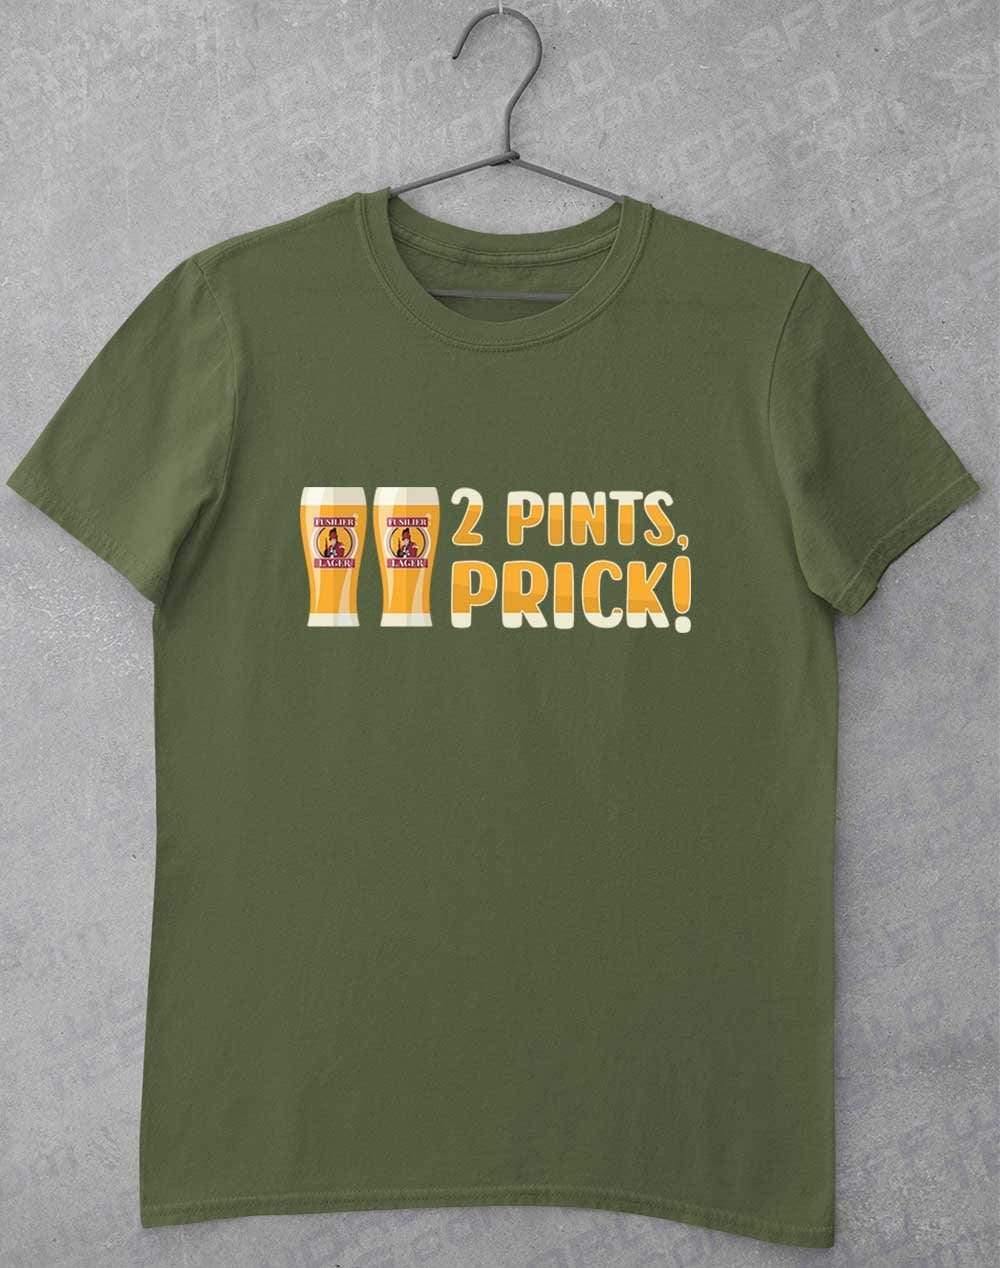 2 Pints Pr*ck T-Shirt S / Military Green  - Off World Tees